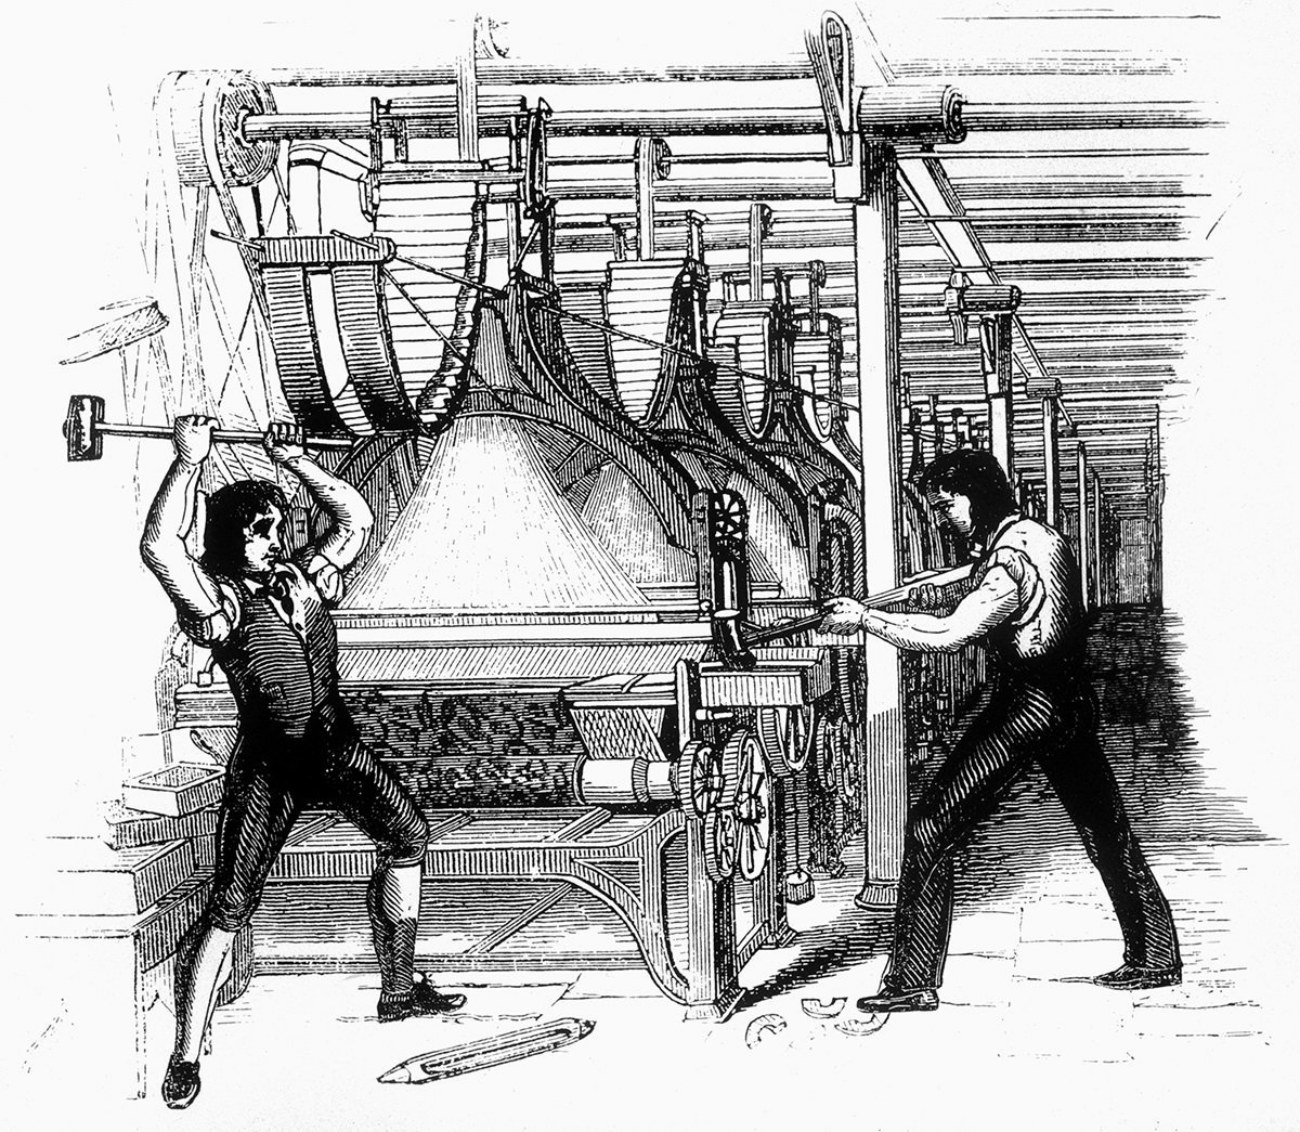 2 luddites breaking a frame textile machine